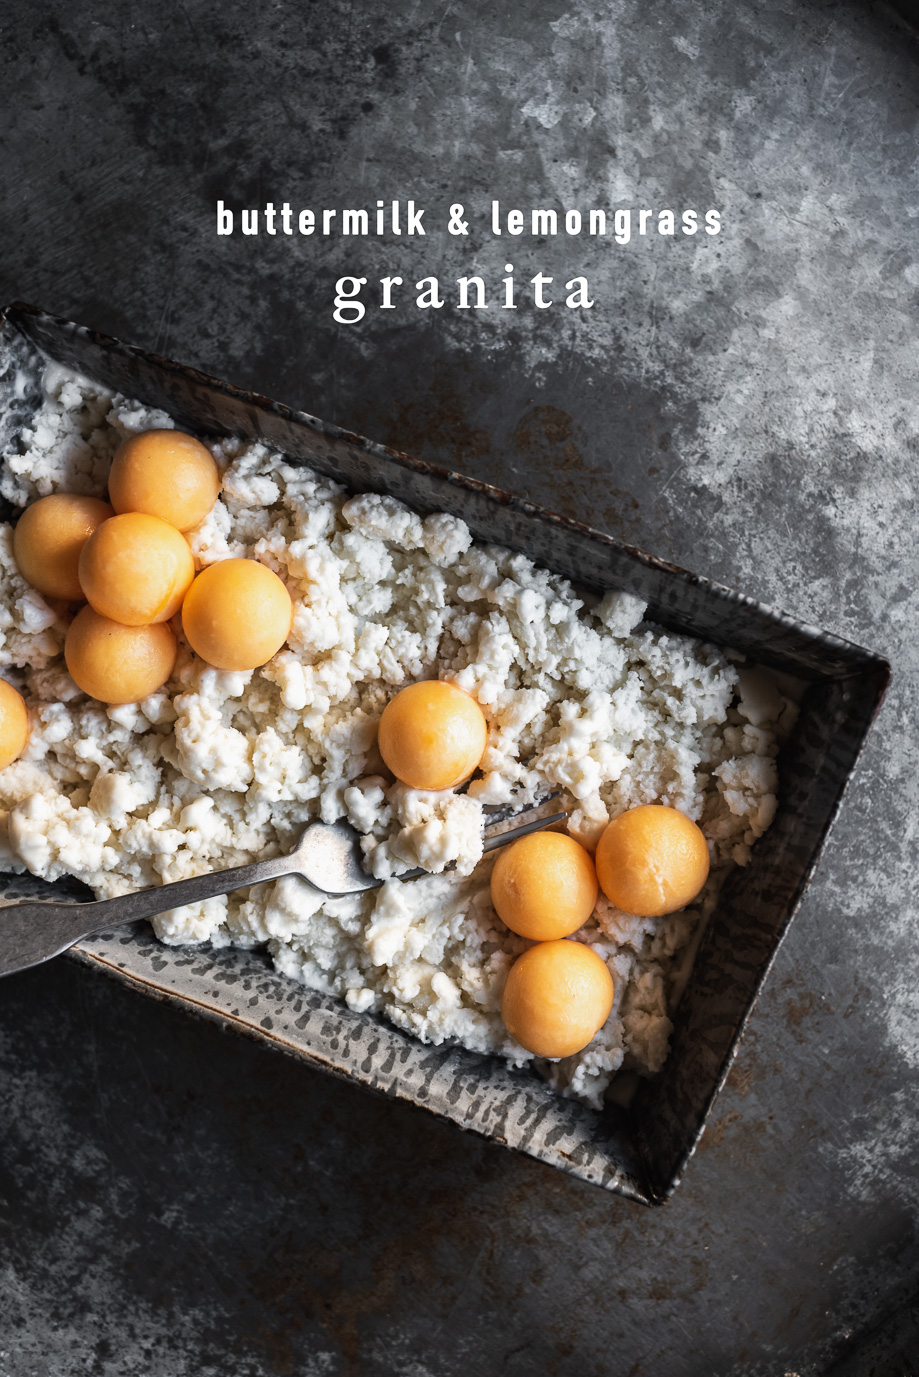 buttermilk & lemongrass granita from Smoke, Roots, Mountain, Harvest cookbook